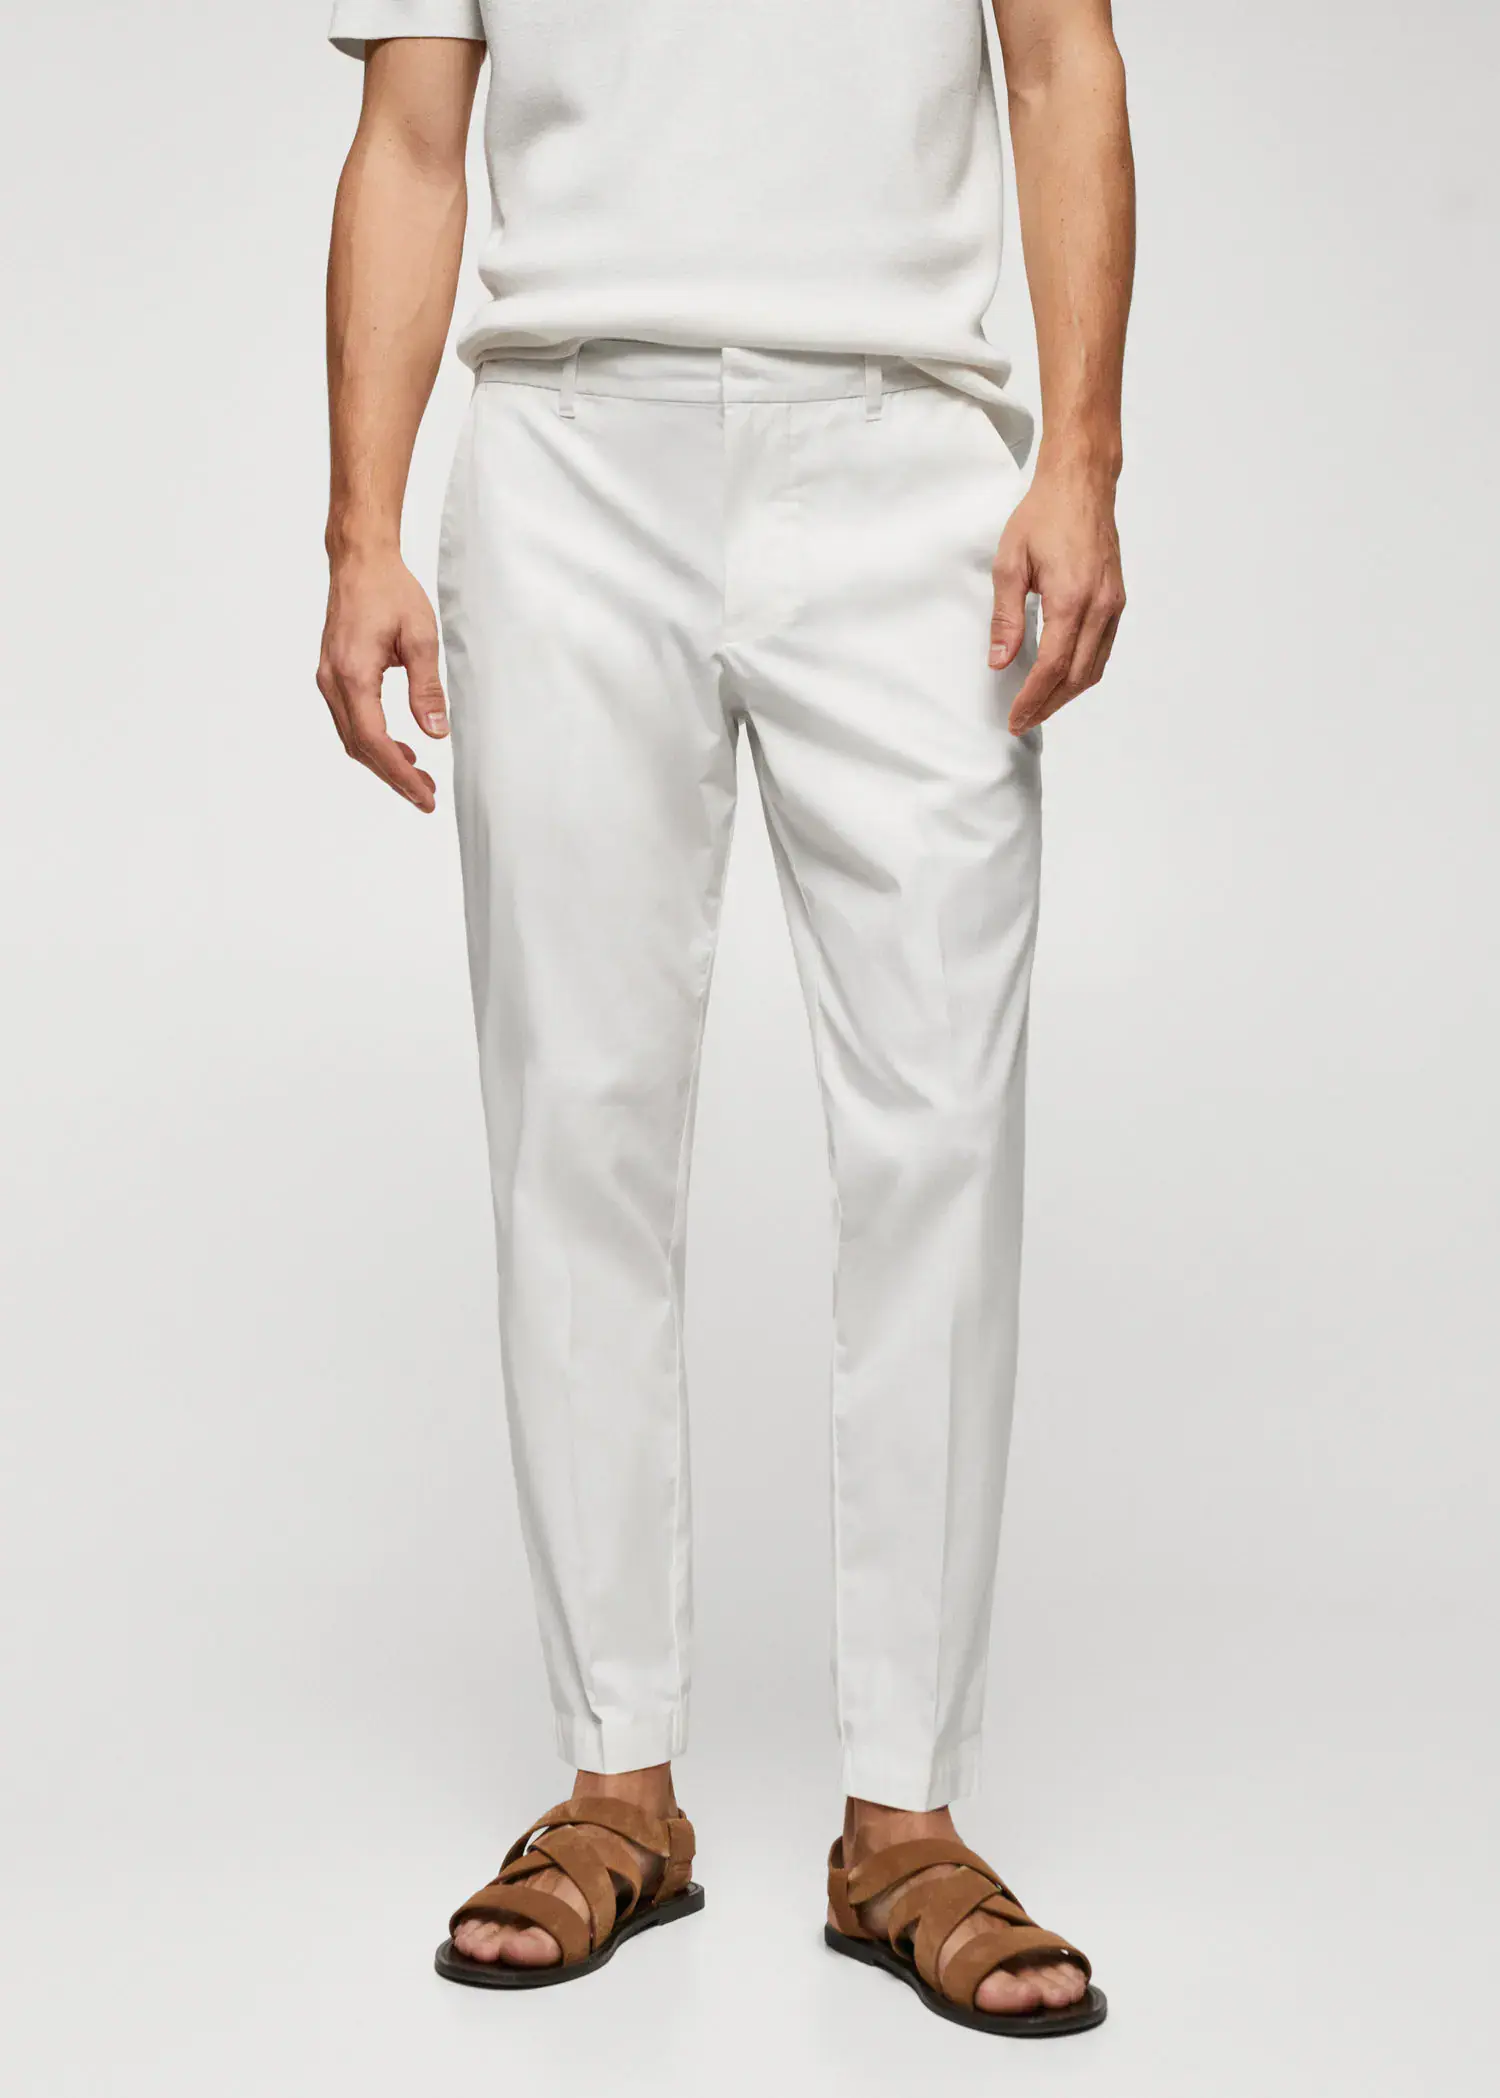 Mango Slim-fit cotton trousers. a man wearing white pants and a white shirt. 